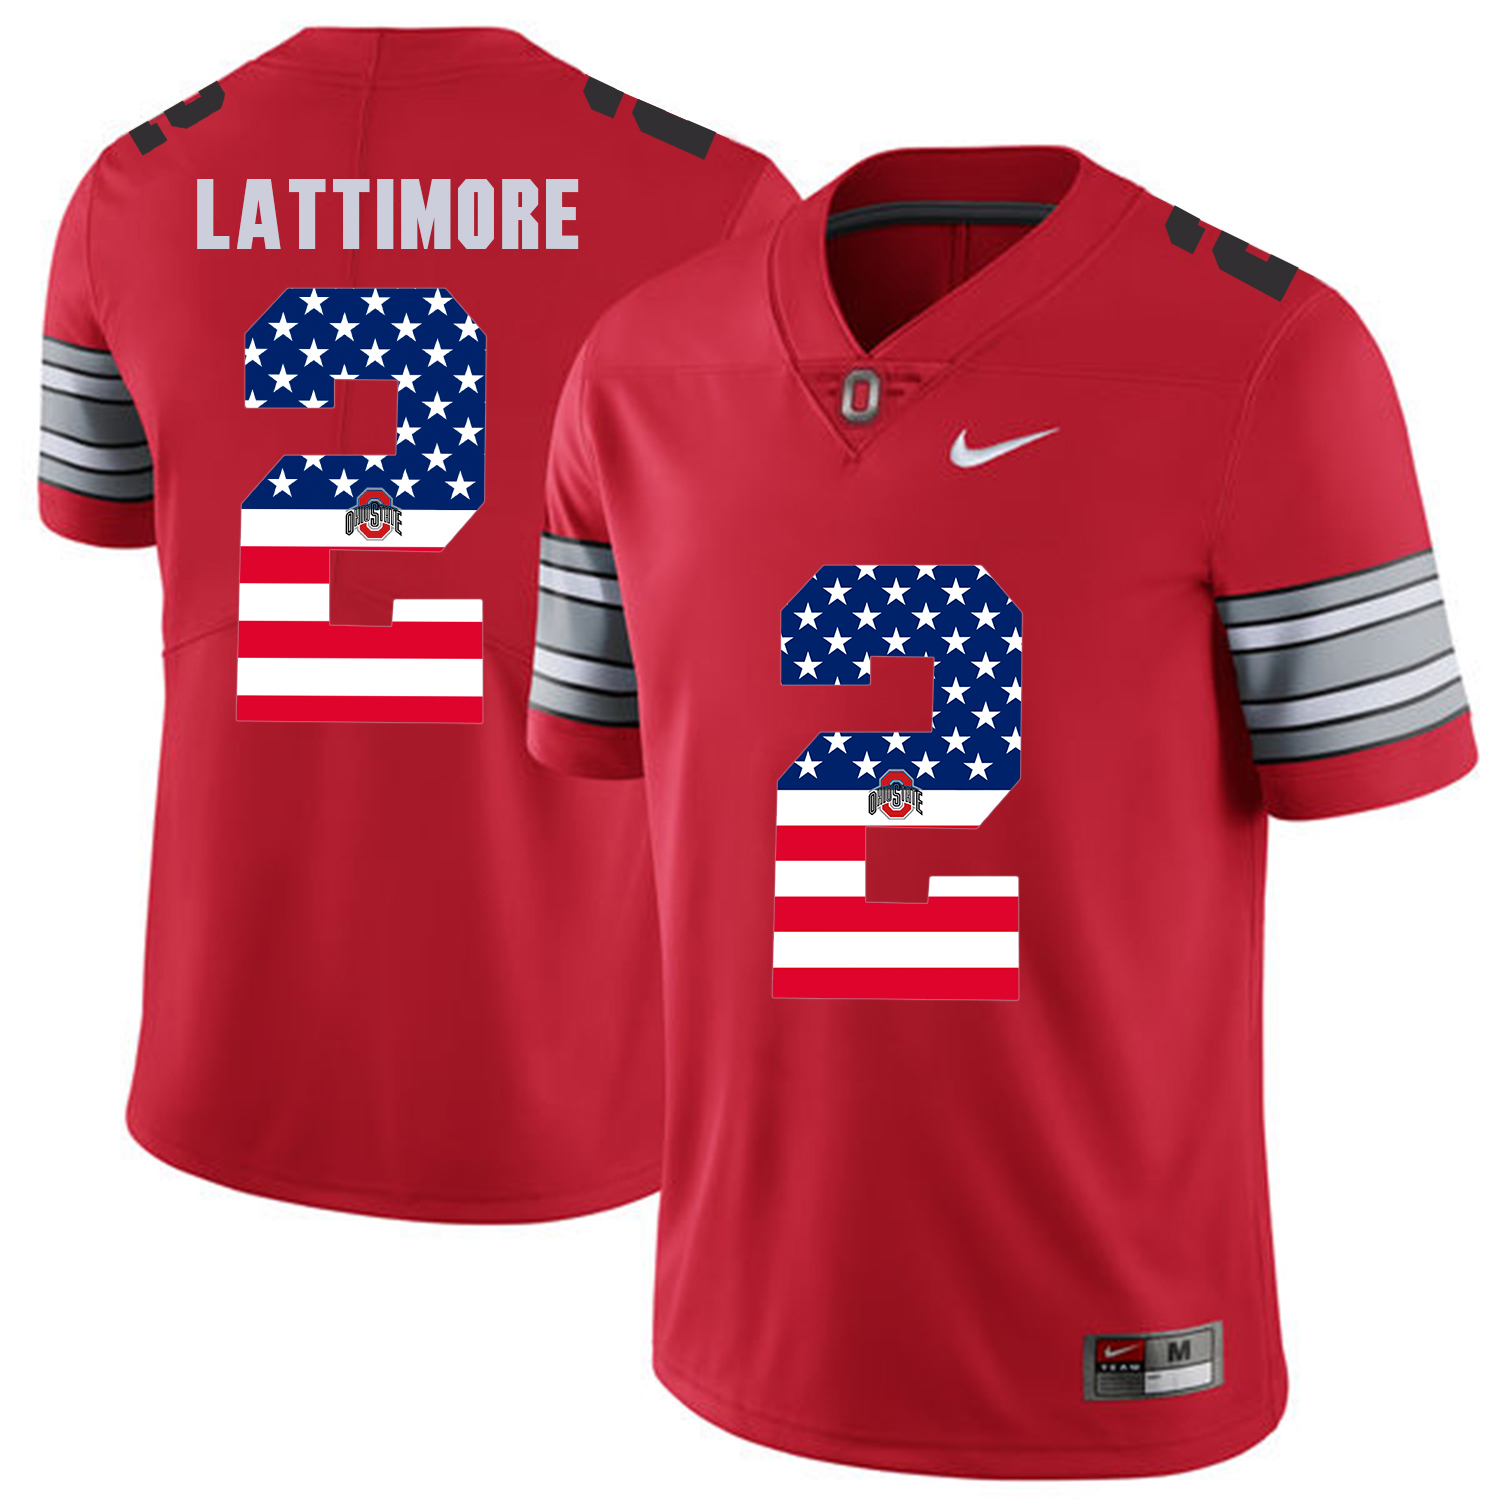 Men Ohio State 2 Lattimore Red Flag Customized NCAA Jerseys